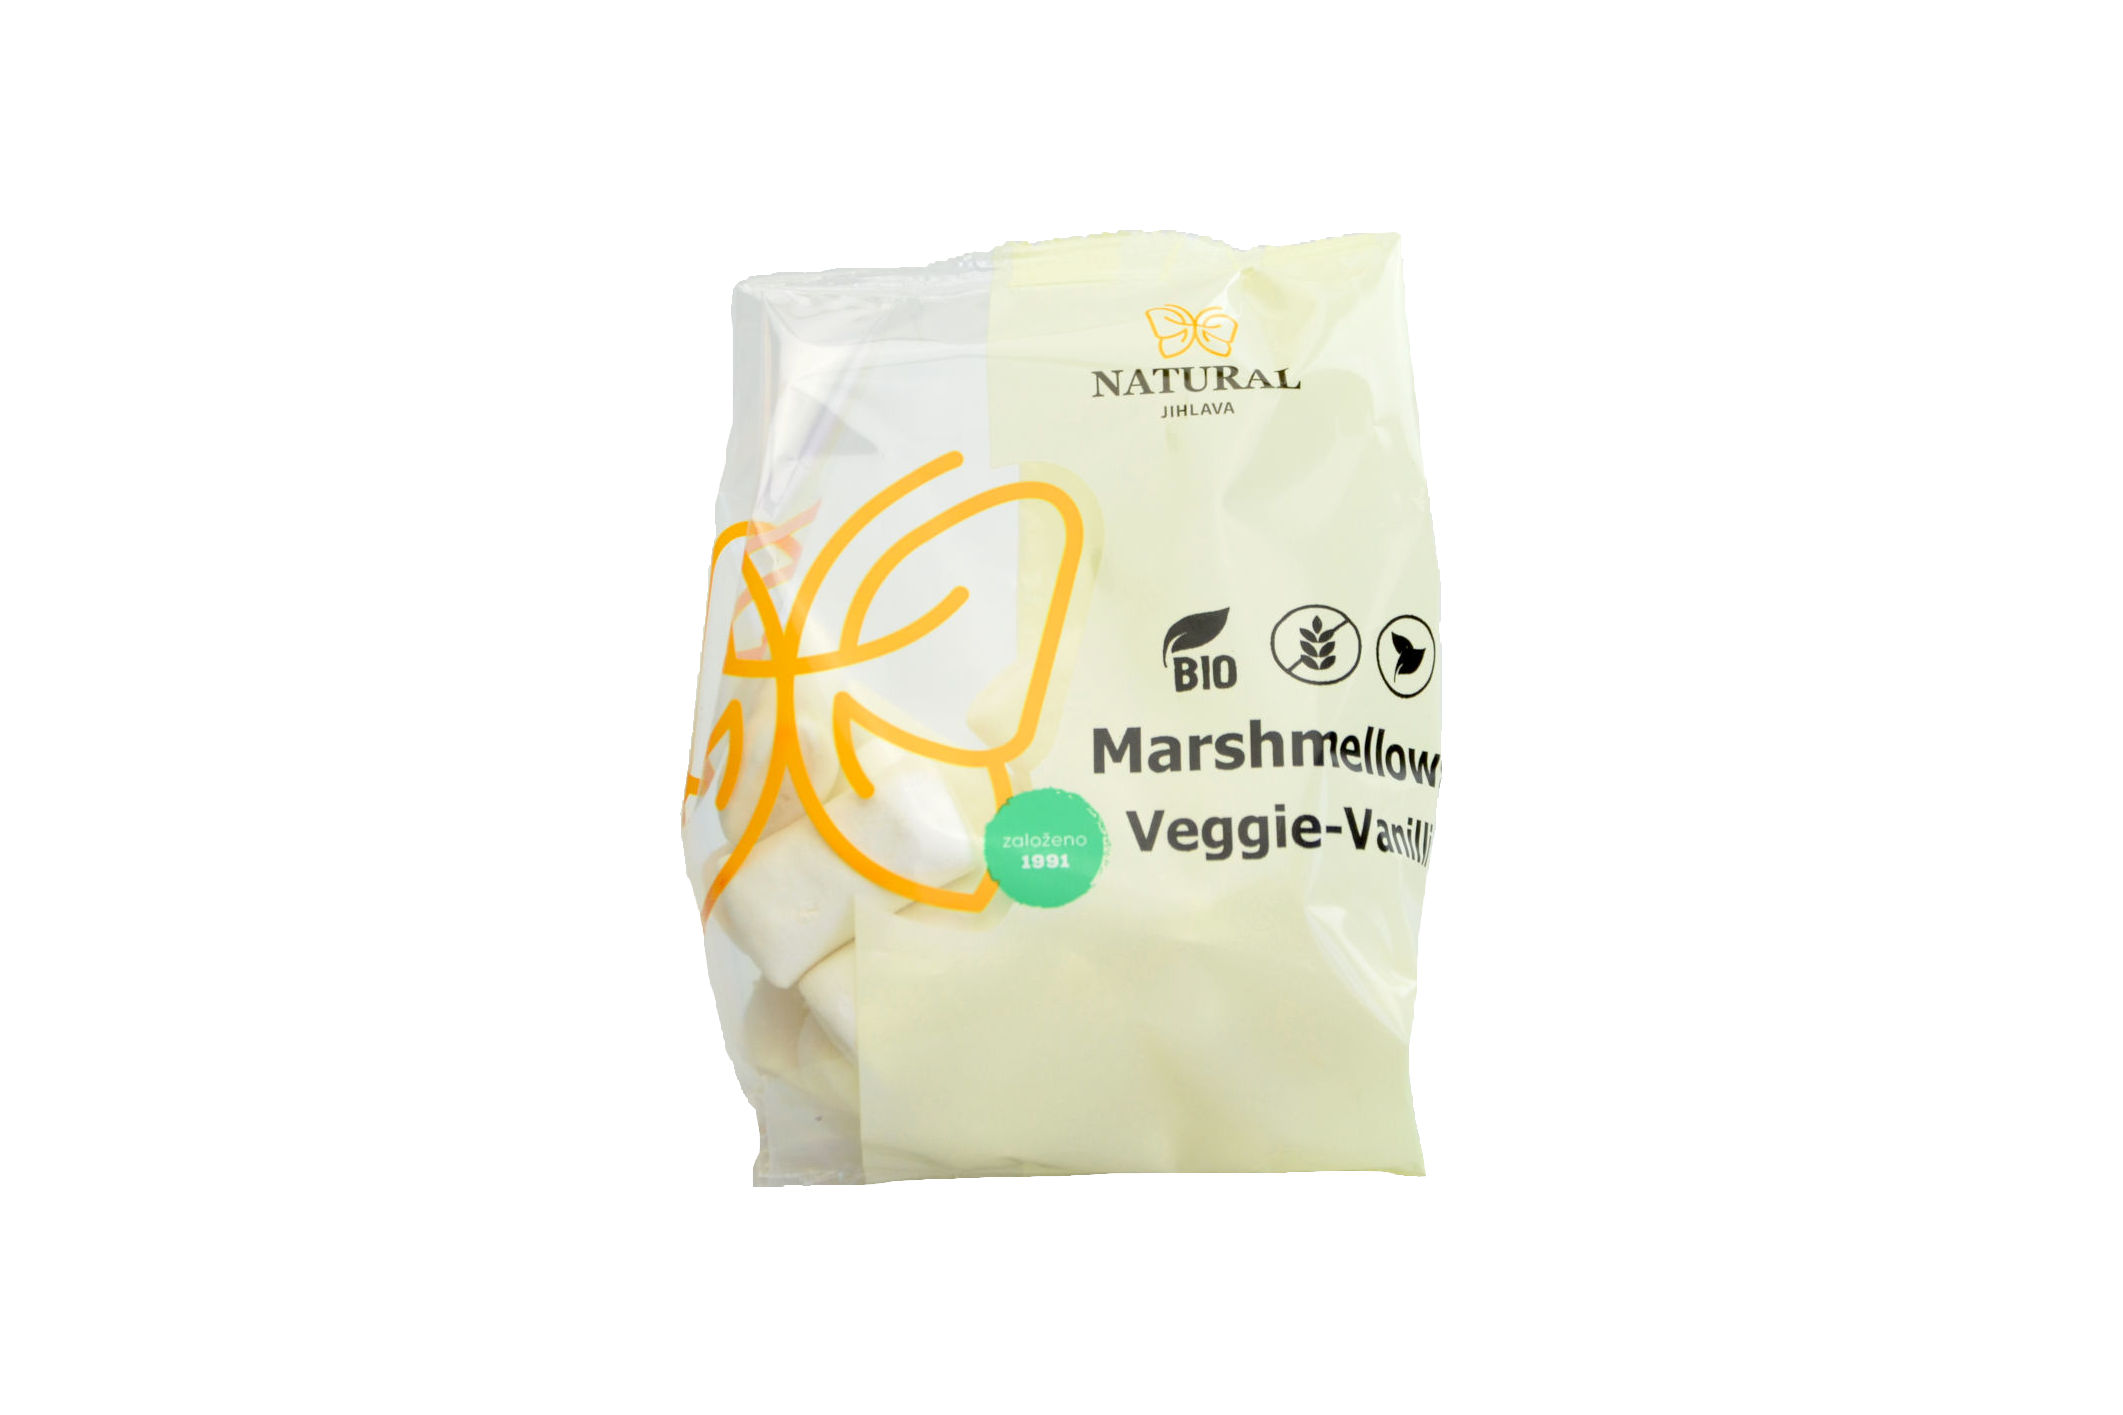 Marshmallows - bonbóny Veggie-Vanilli BIO, VEGAN - Natural 100g (min. trvanlivost do 12.5.2023)